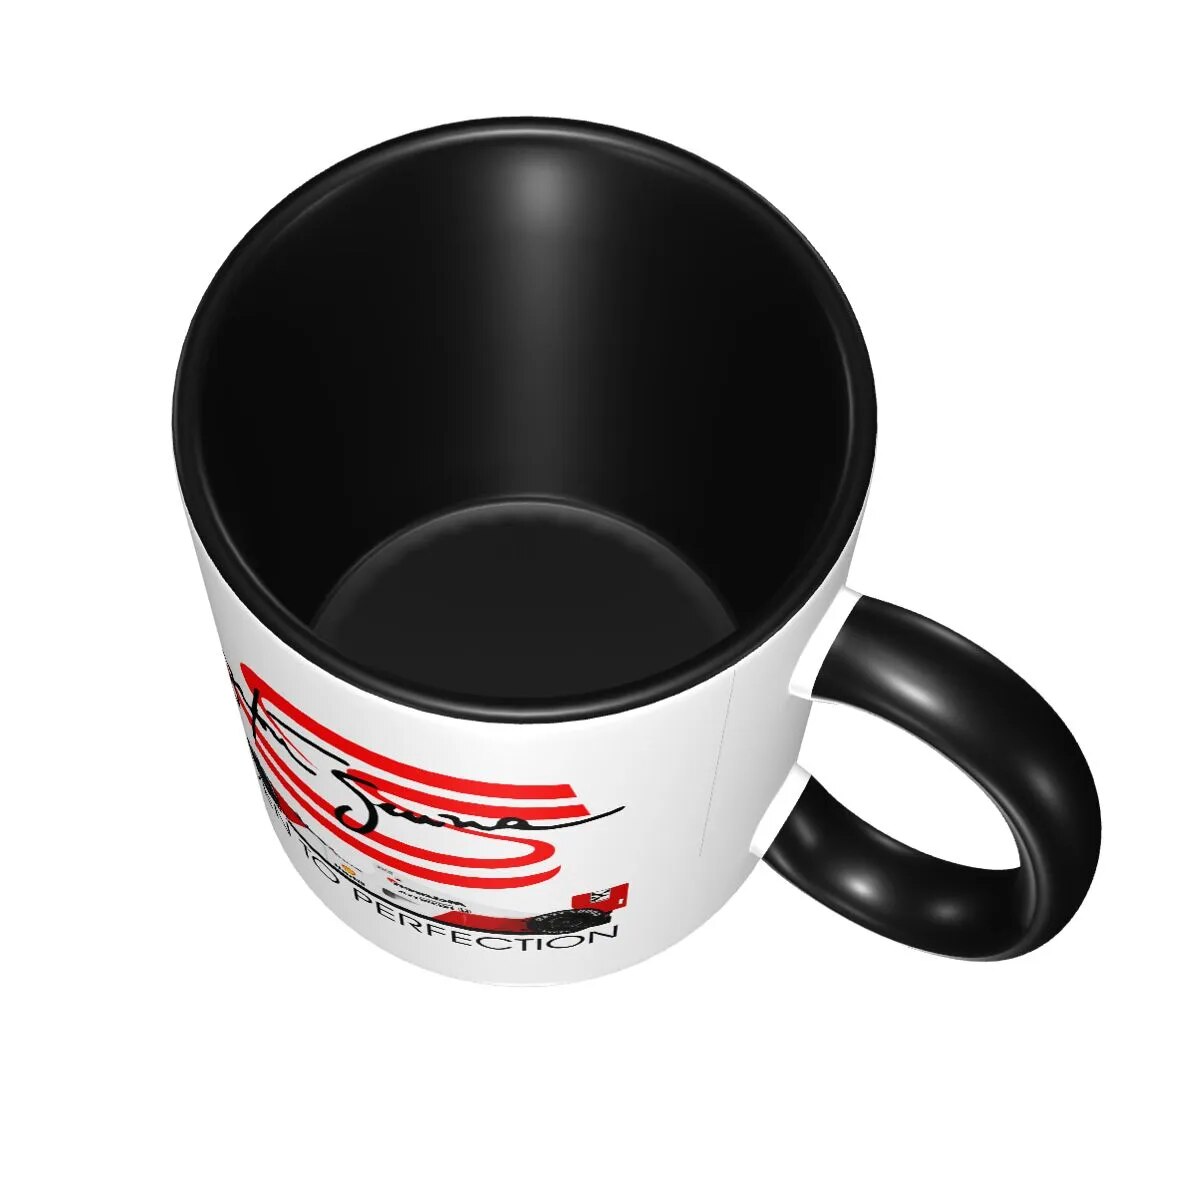 Ayrton Senna logo mug - Drive to Perfection